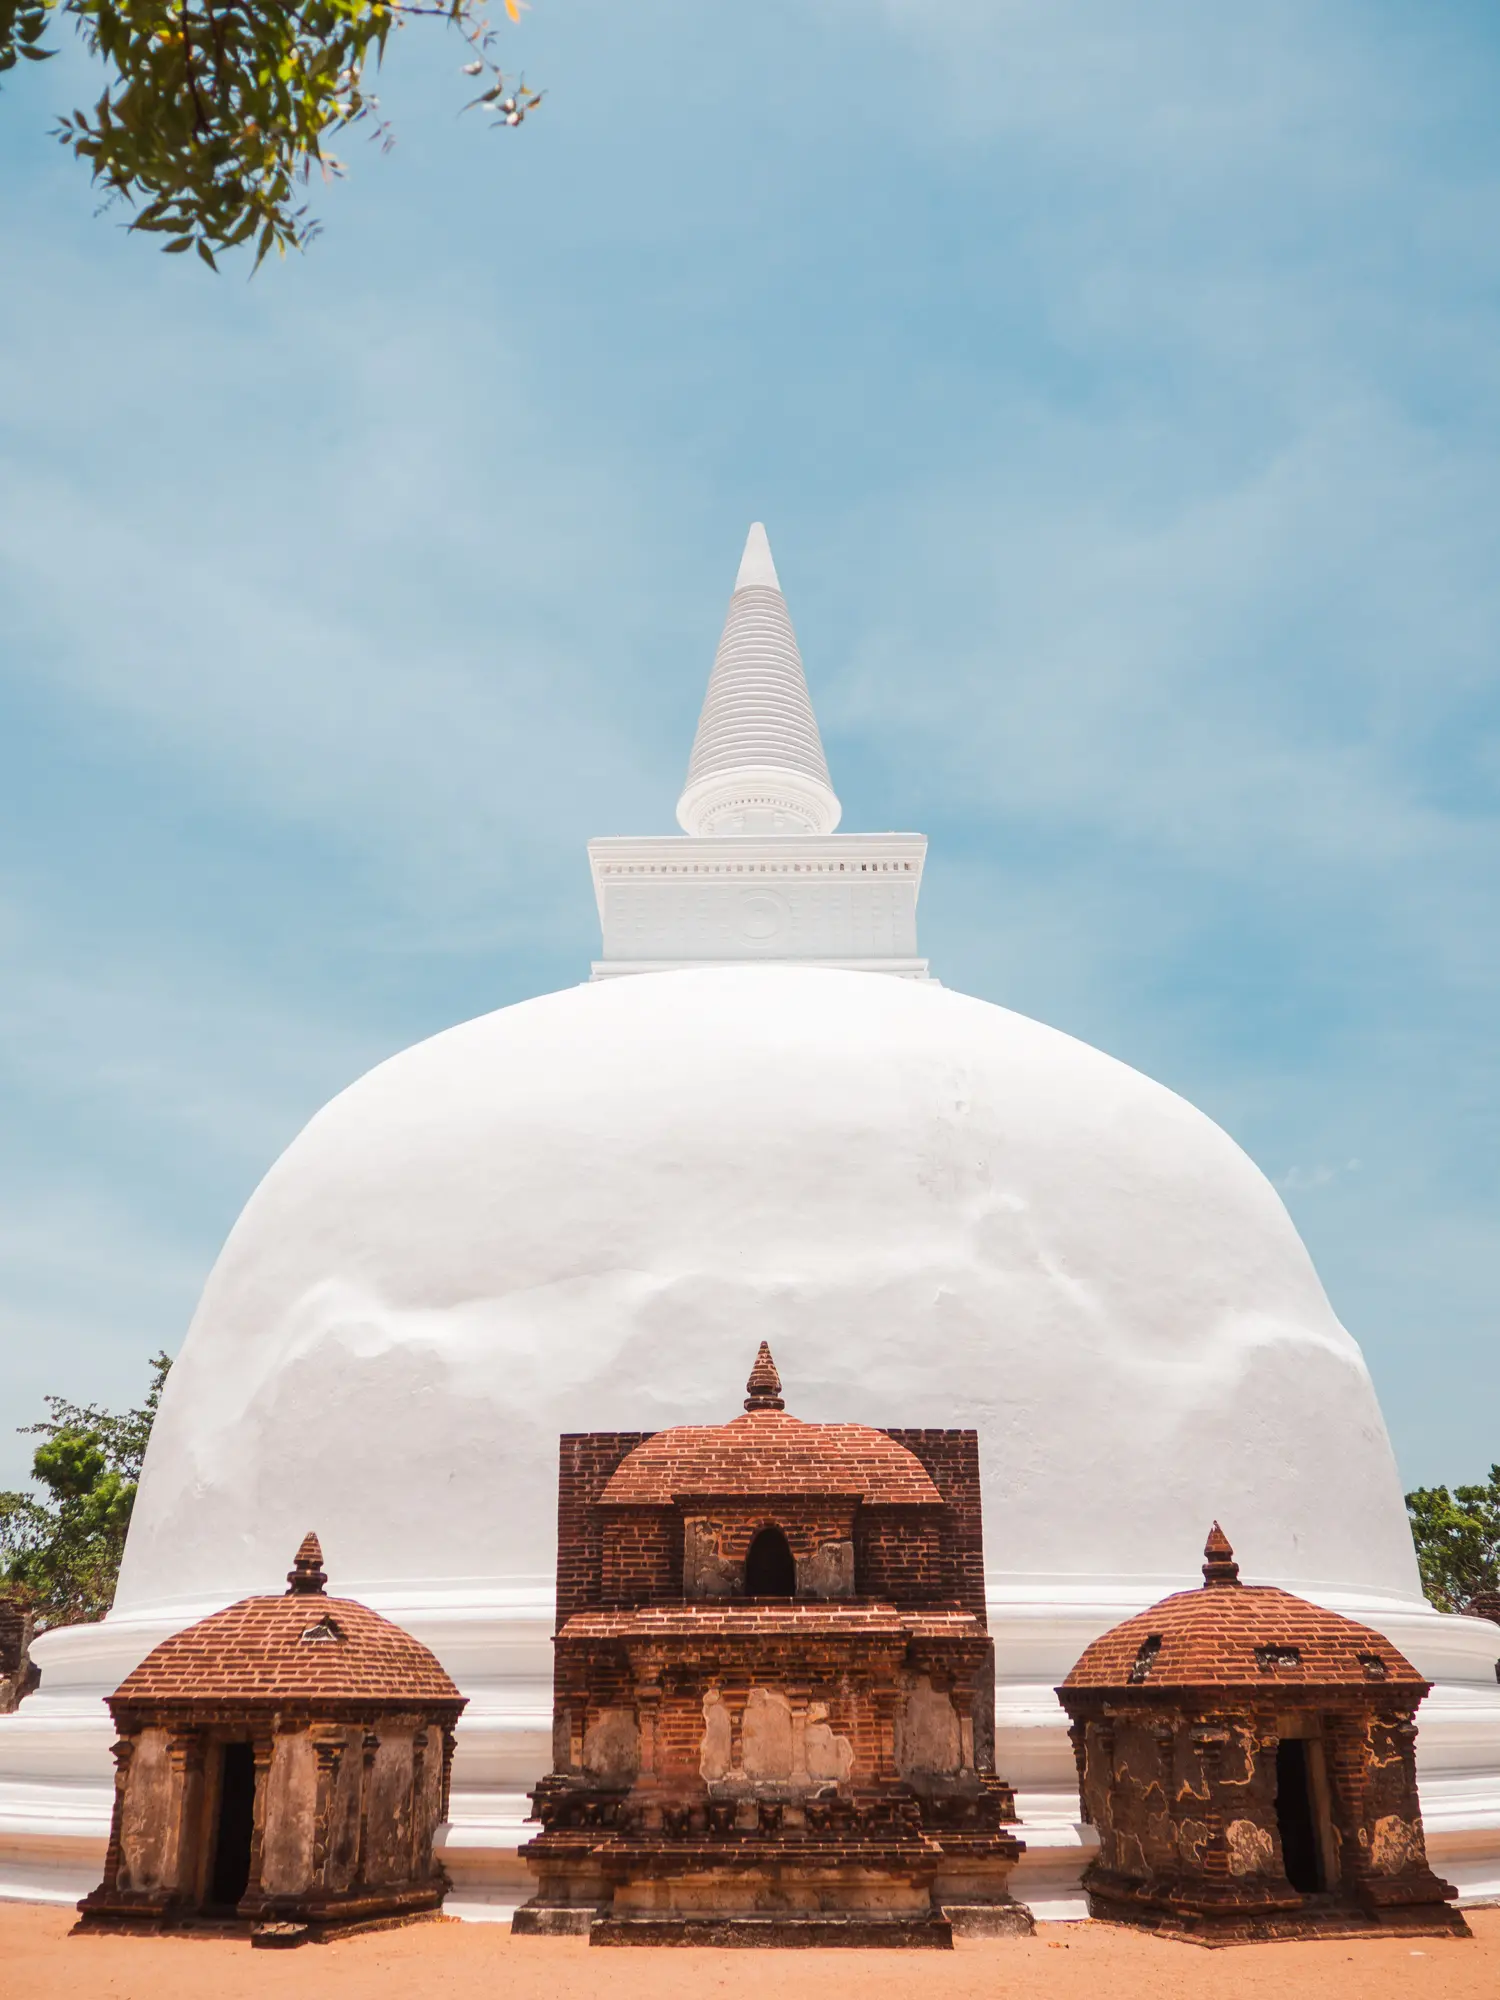 Bright white stupa Kiri Vehera with three brown brick shrines in front set against a blue sky in Polonnaruwa, Sri Lanka.